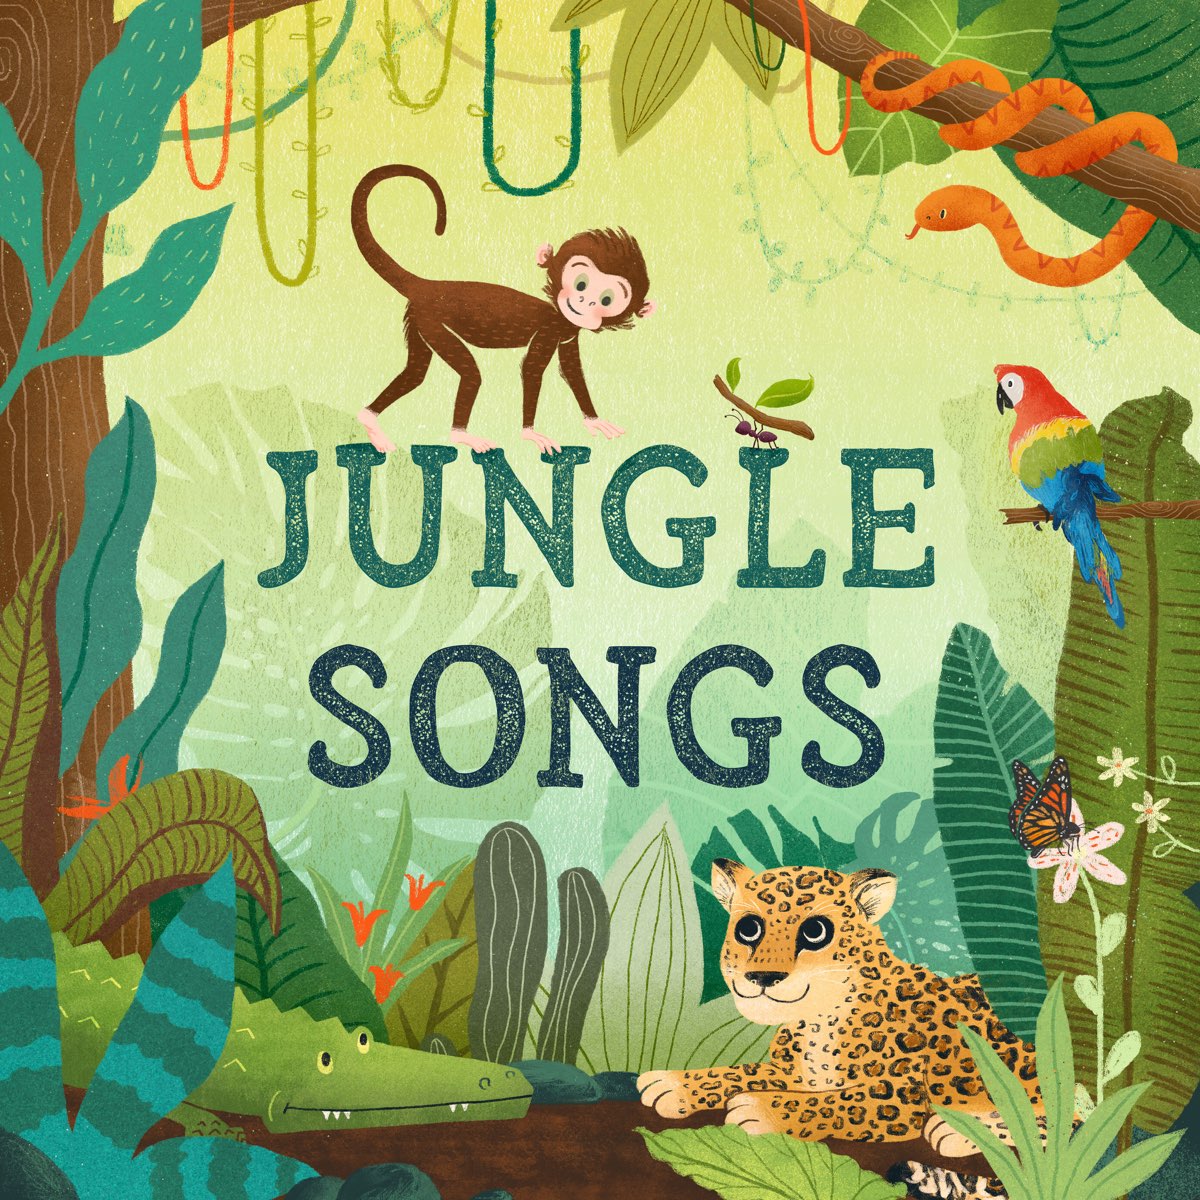 Jungle песня перевод. Jungle Song. Песня про джунгли. Jungle песня слова. Nursery Rhymes.